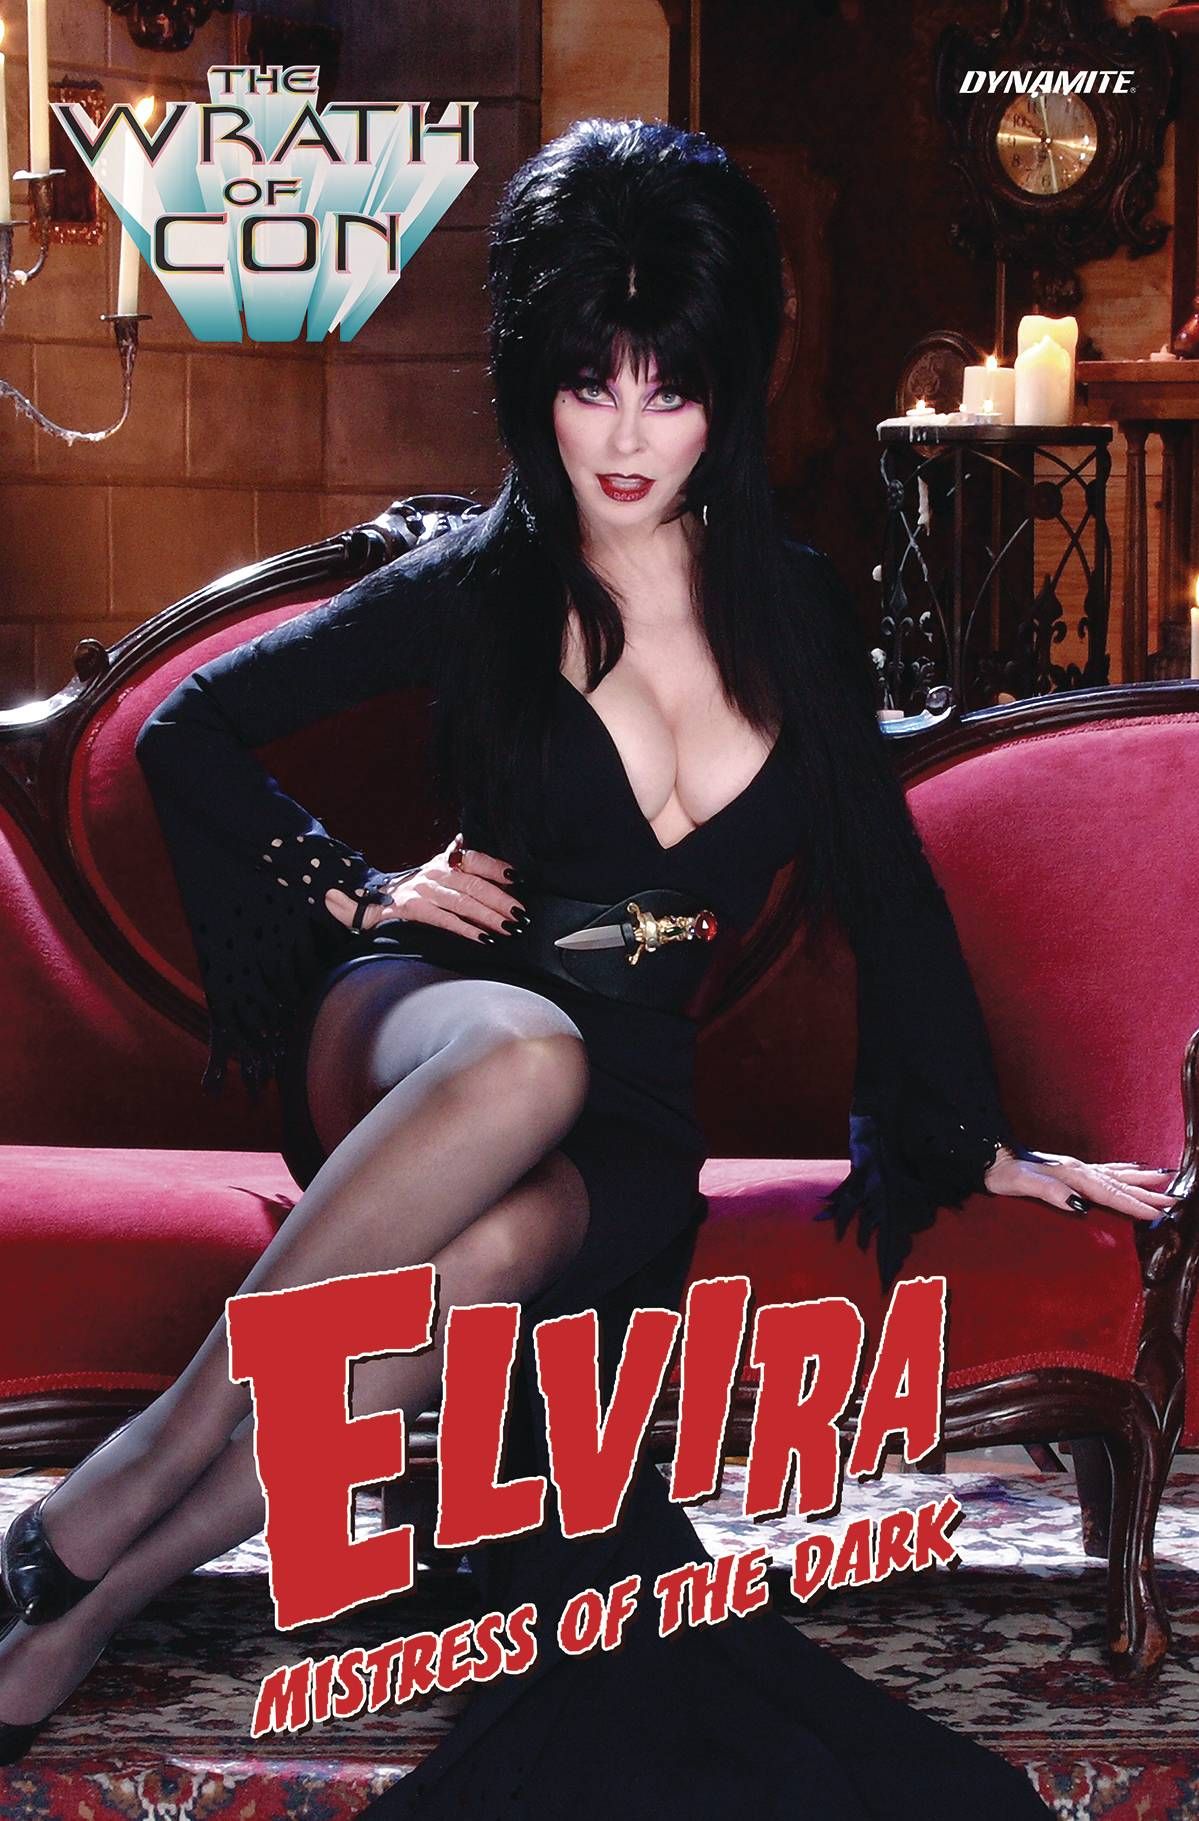 Elvira: Wrath of Con #nn Comic